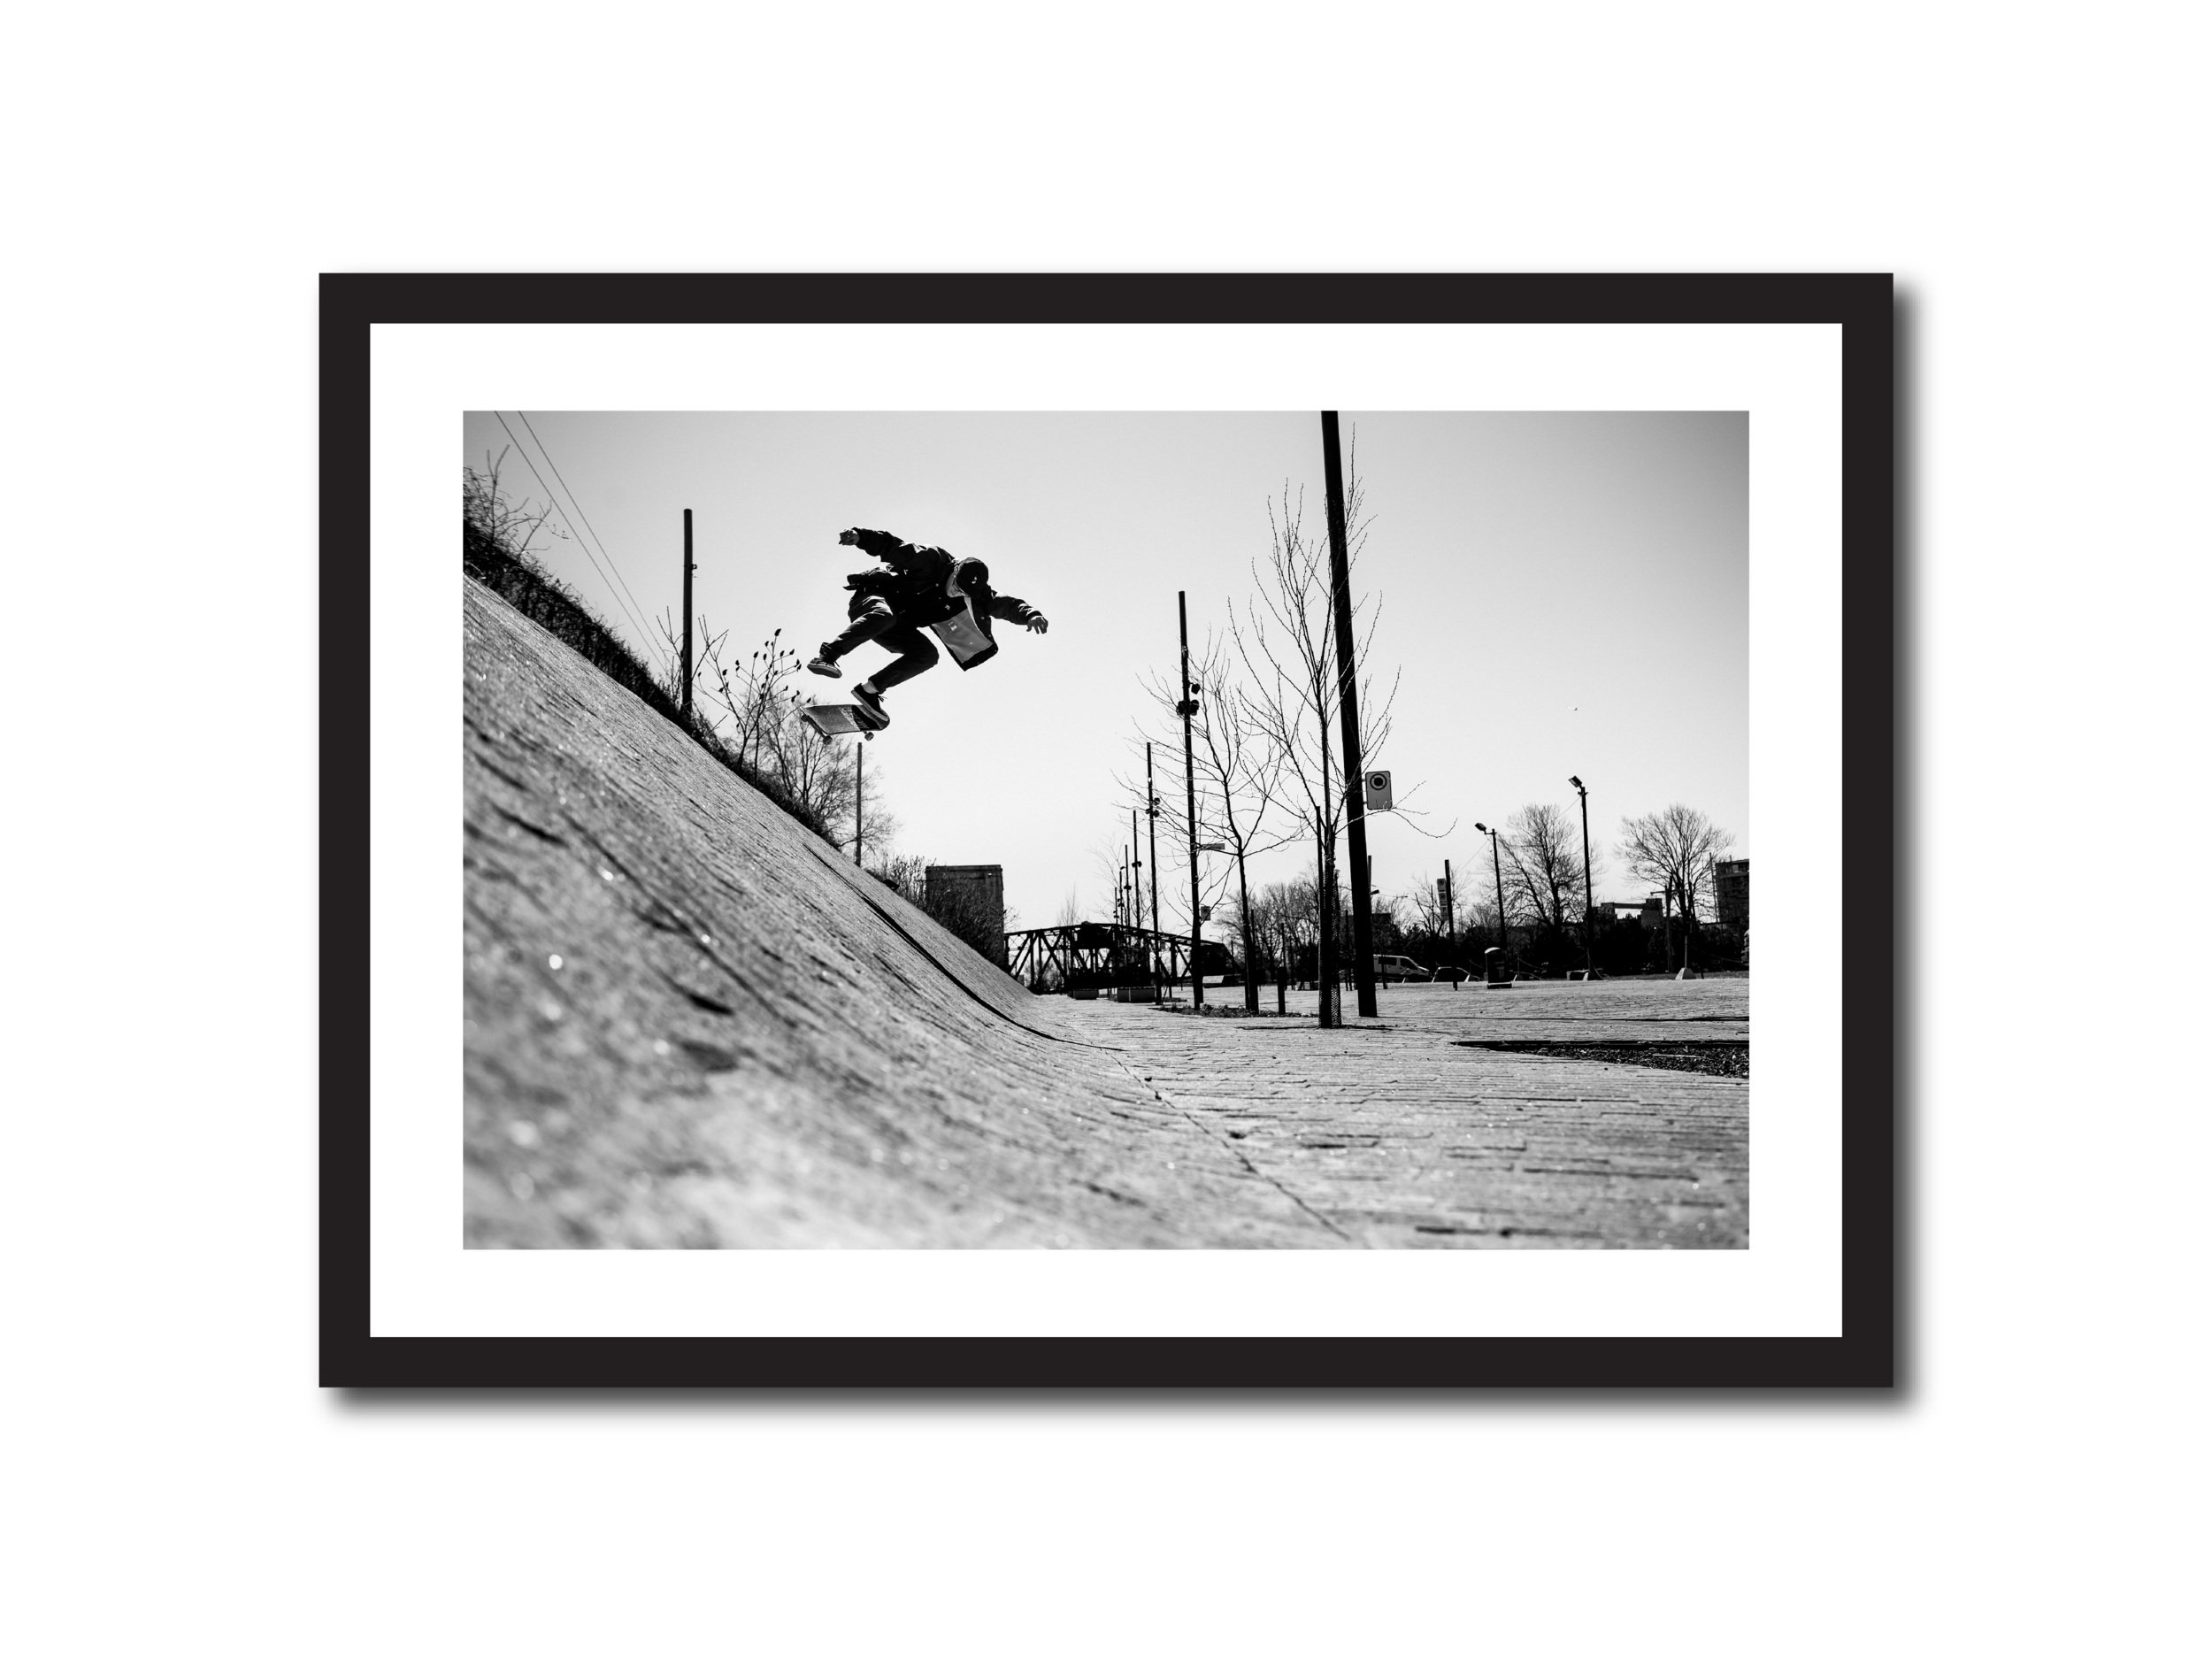 Skateboard+series+05-05.jpg